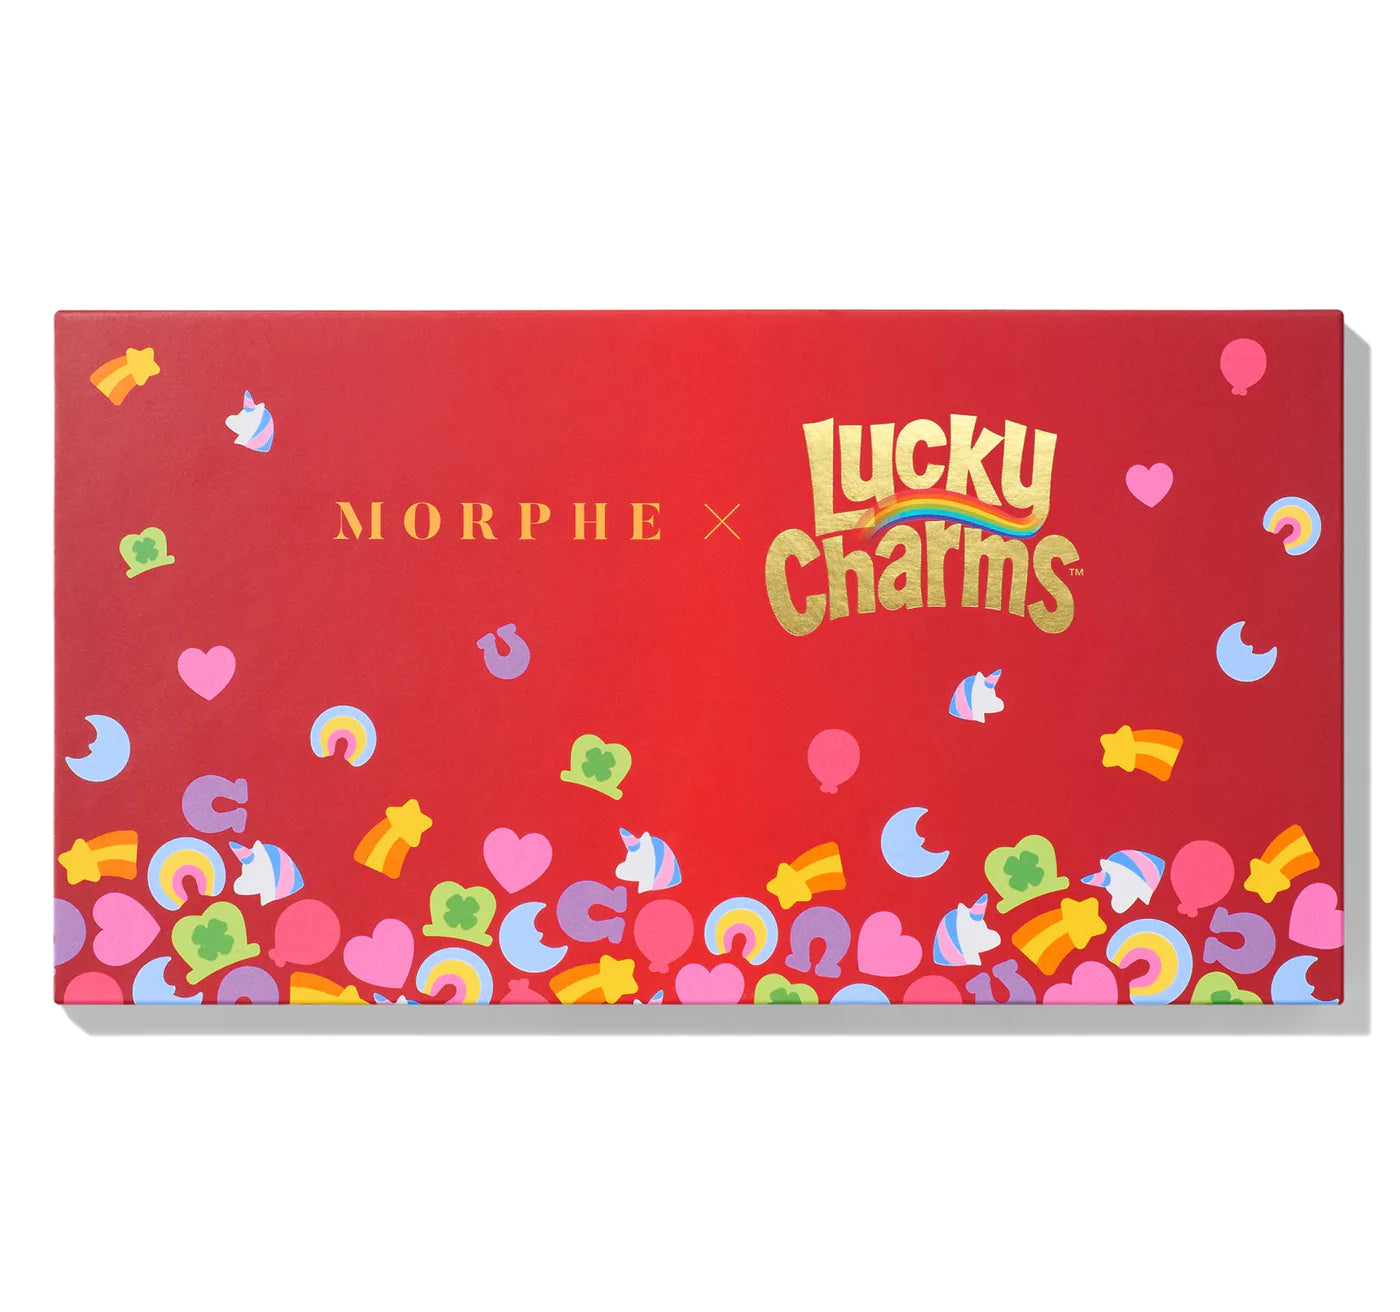 Morphe x Lucky Charms Make Some Magic